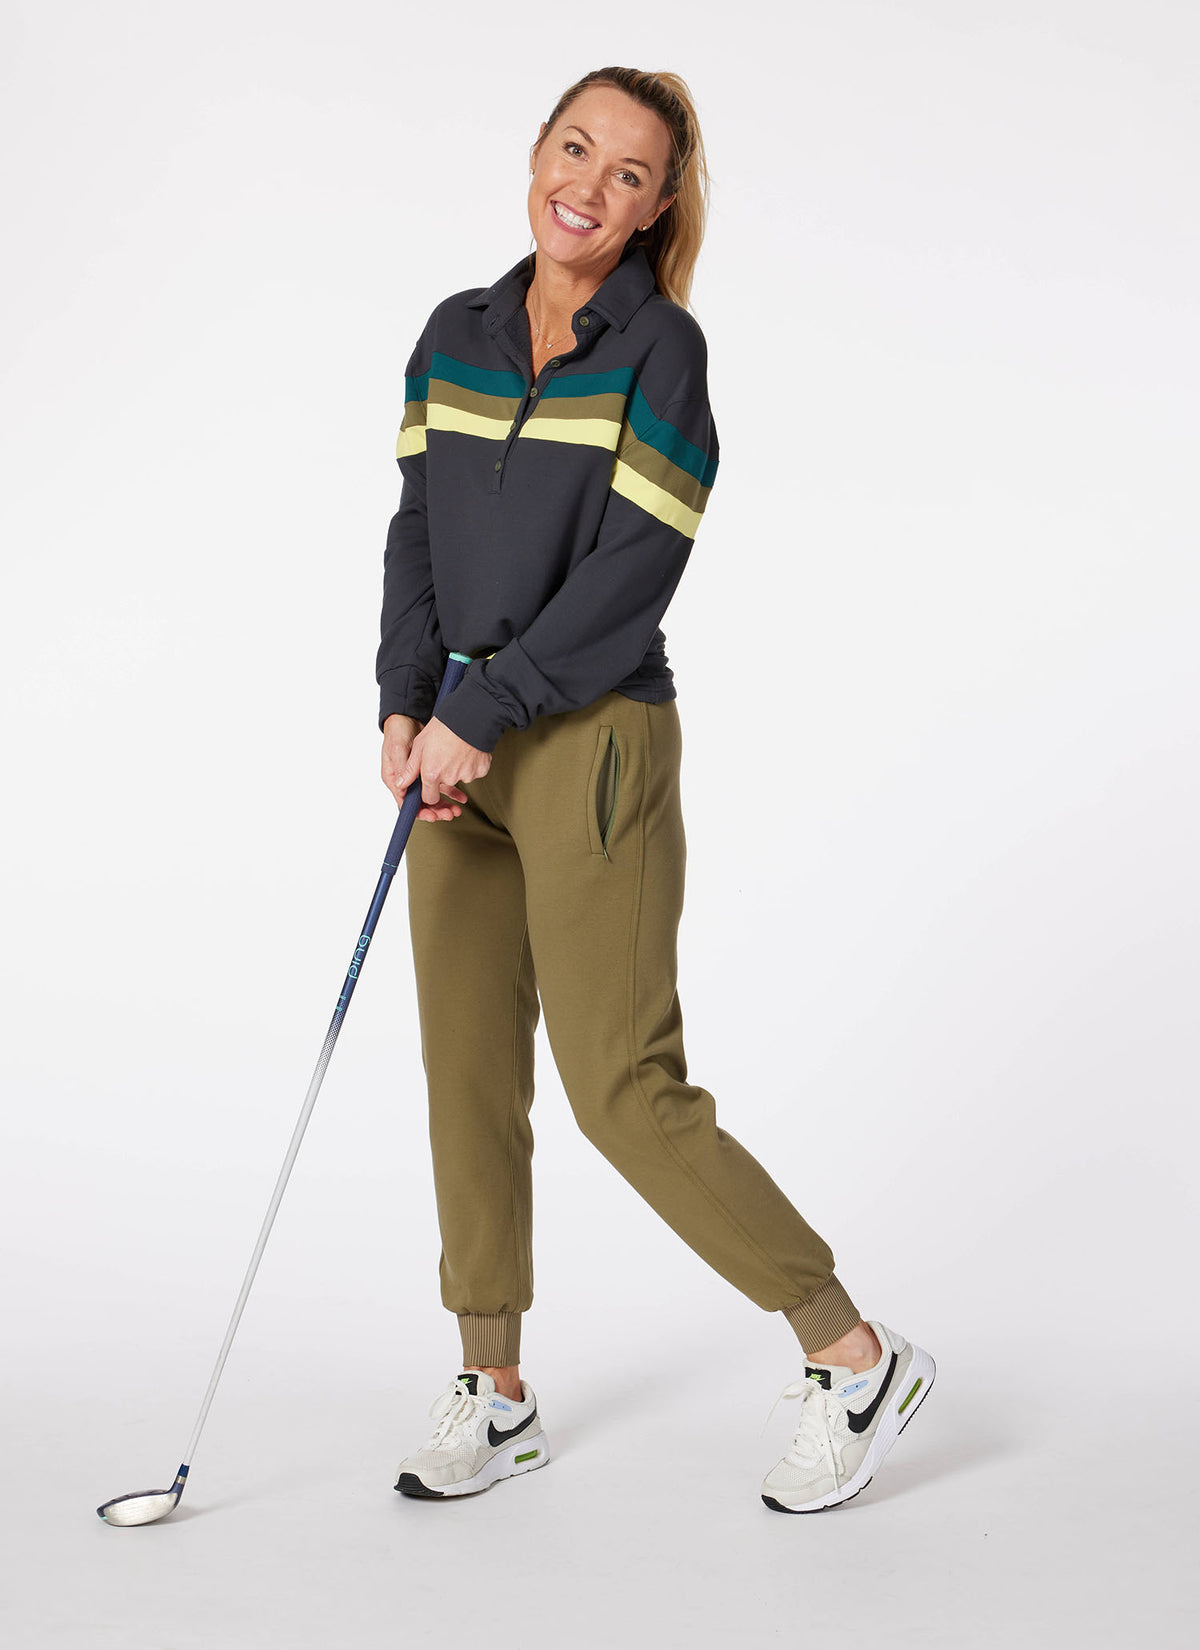 Cute Womens Golf Pants